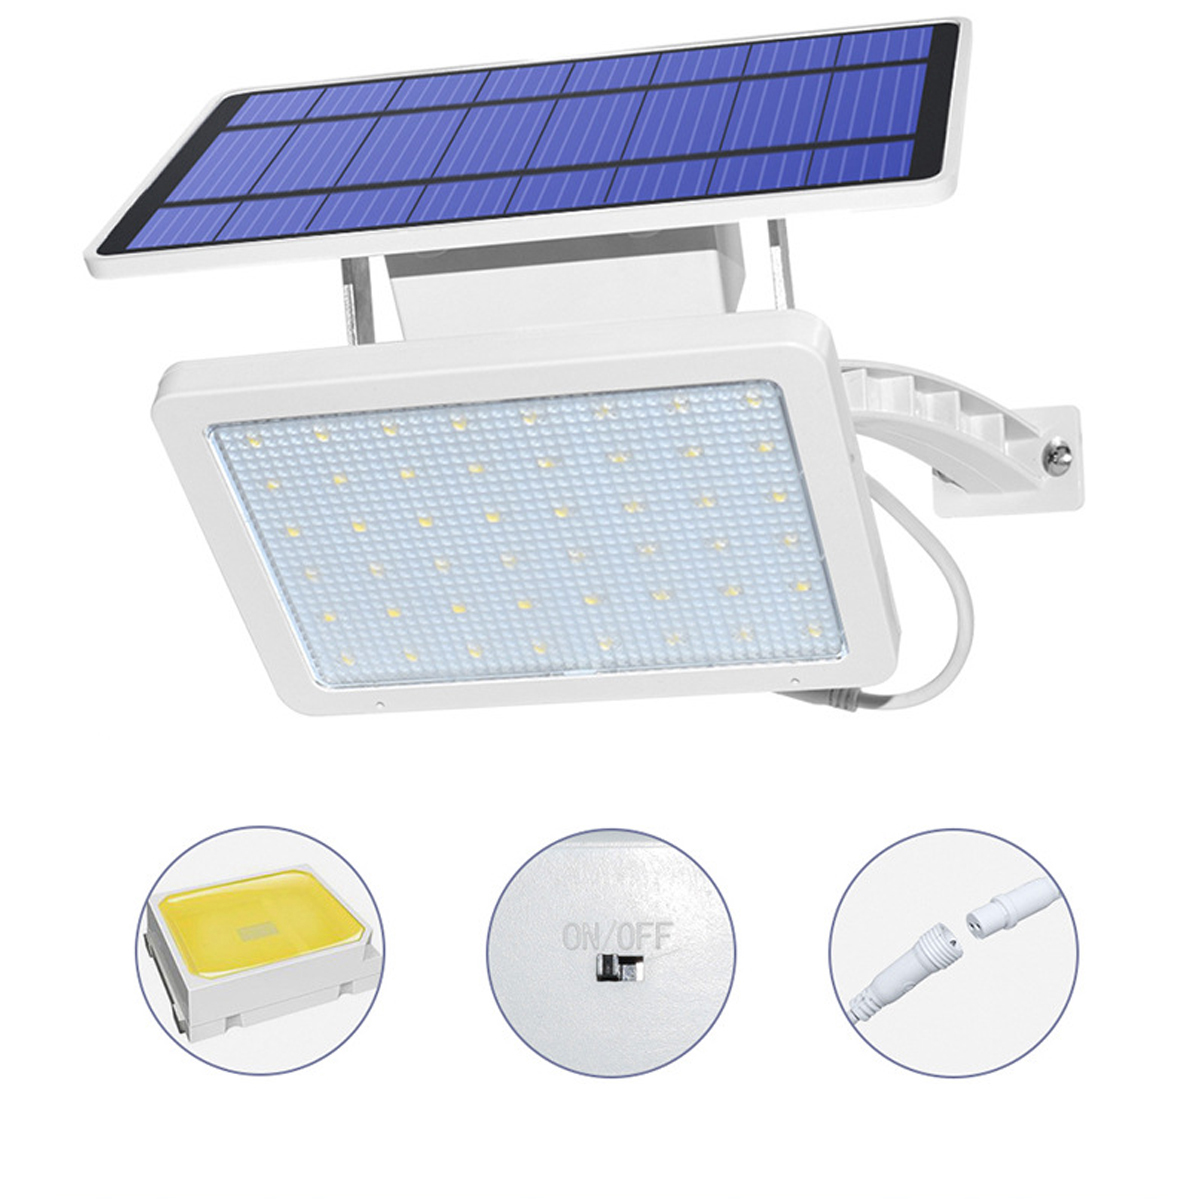 

48 LED 1500LM Outdoor Solar PIR Motion Sensor Wall Light Waterproof Garden Lamp